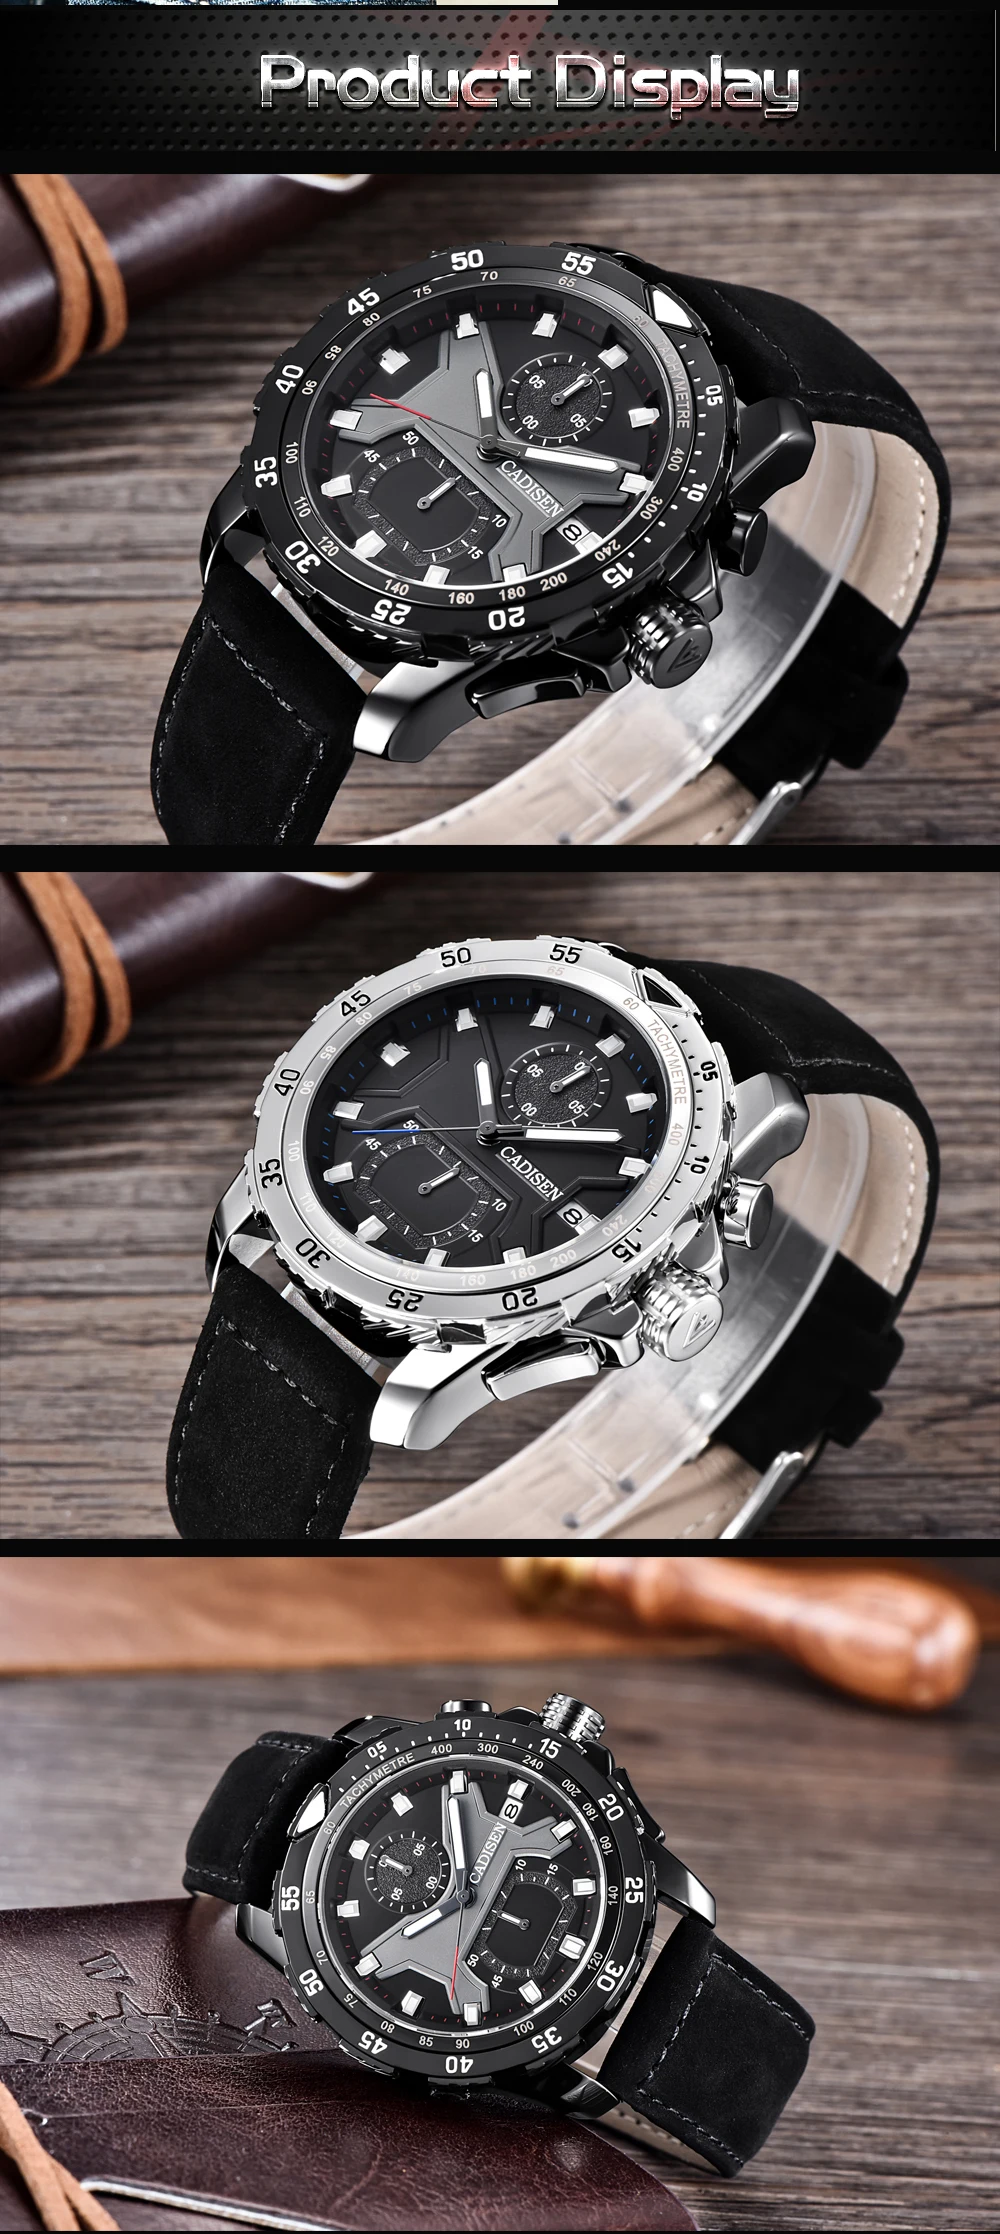 2018 новый бренд Для мужчин кварцевые часы Leatehr Водонепроницаемый аналоговые часы Для мужчин s Дата Повседневное часы Рим время Relogio Masculino